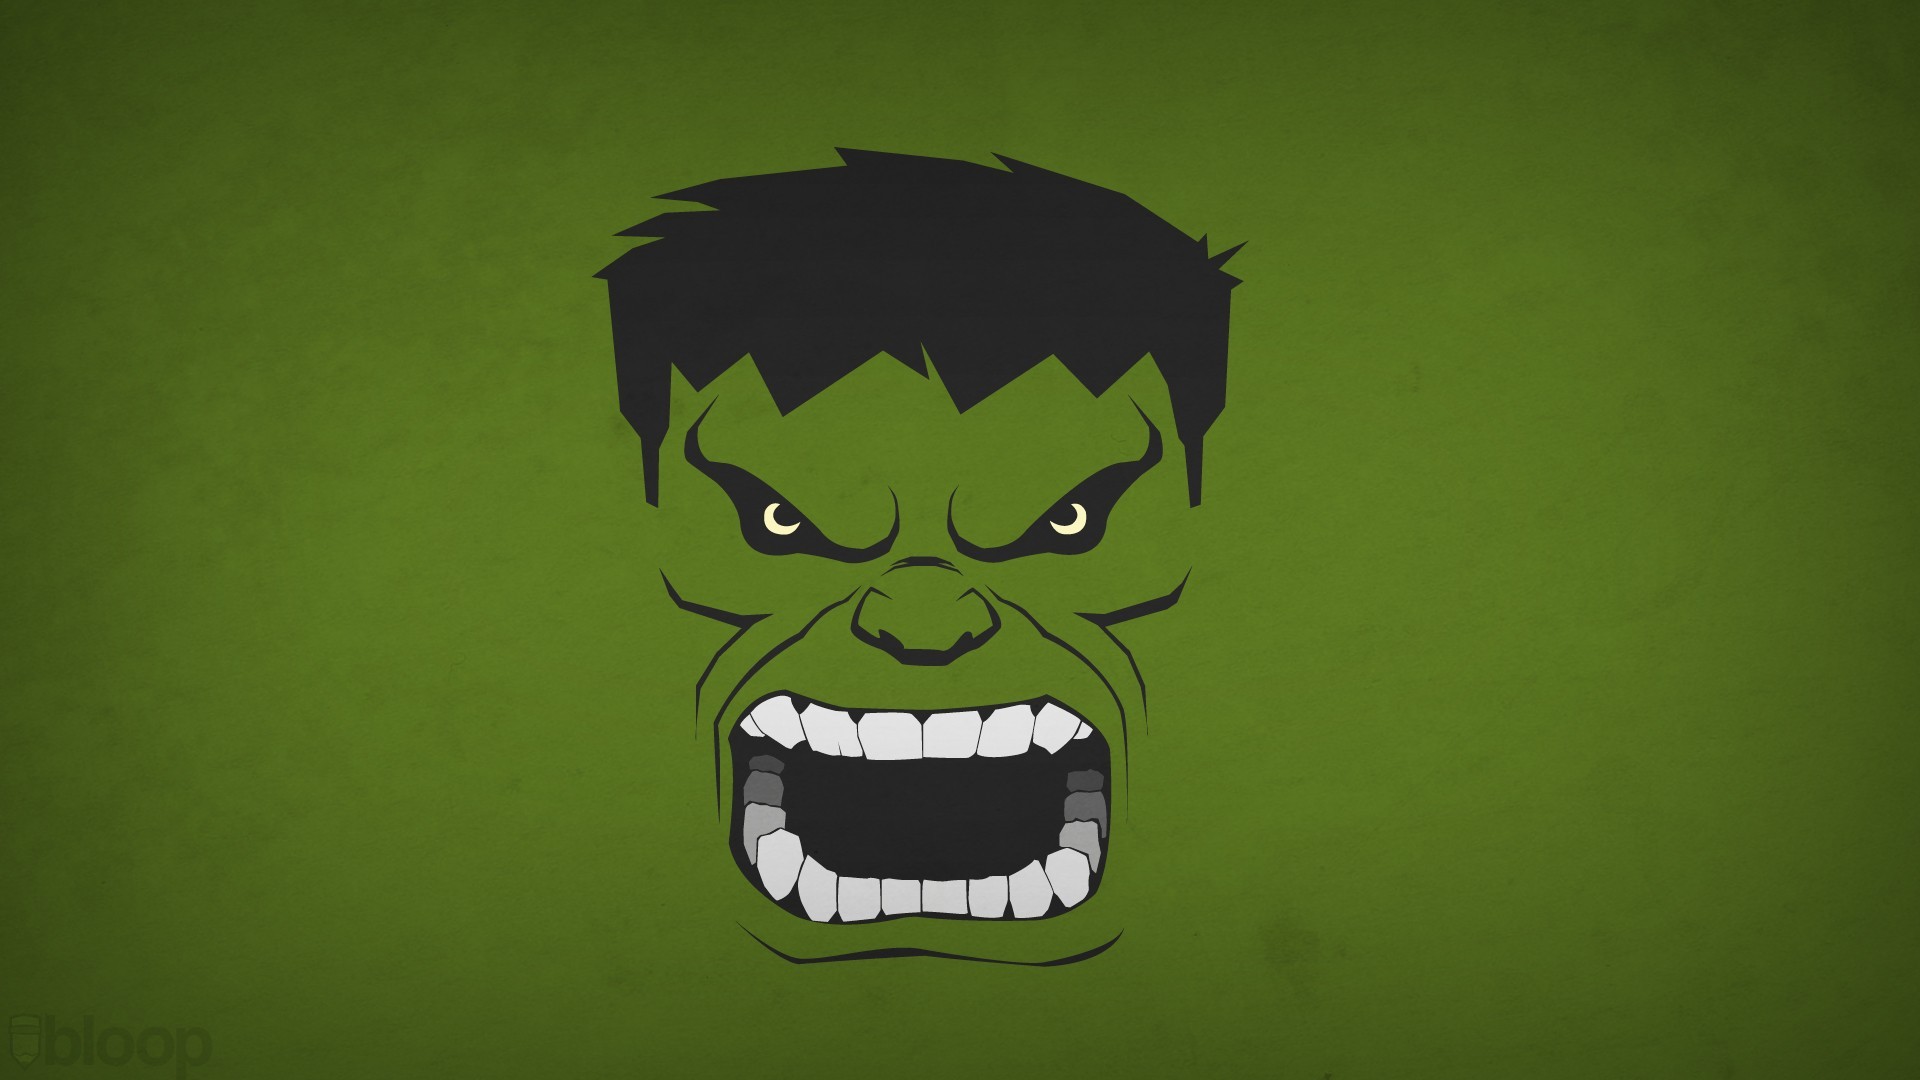 General 1920x1080 comics Hulk hero Blo0p superhero angry face green skin green background simple background comic art